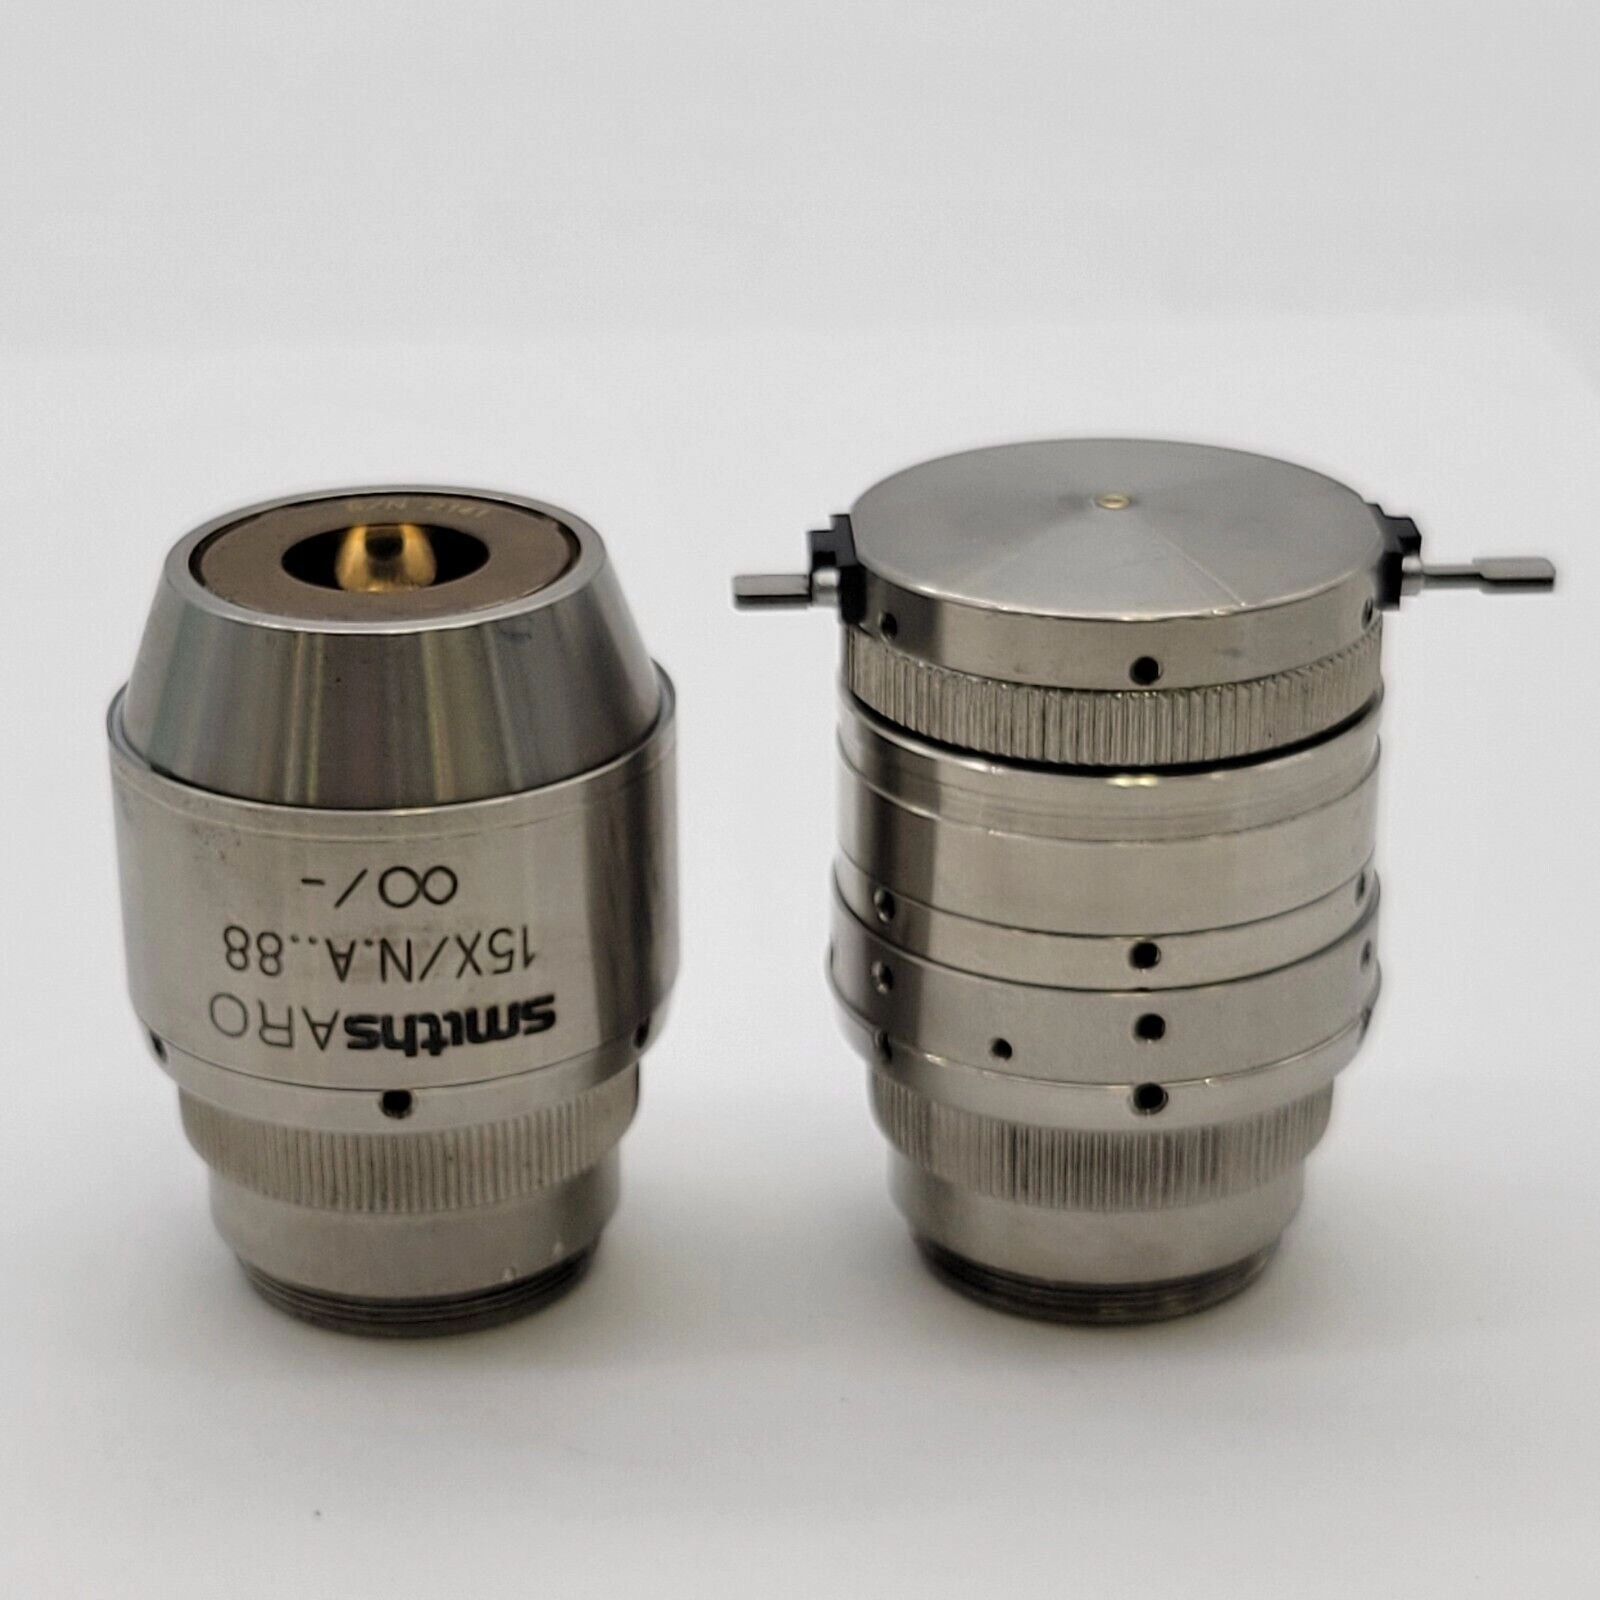 Smiths ARO 15x and ATR 36x Microscope Objective for IlluminatIR Infrared